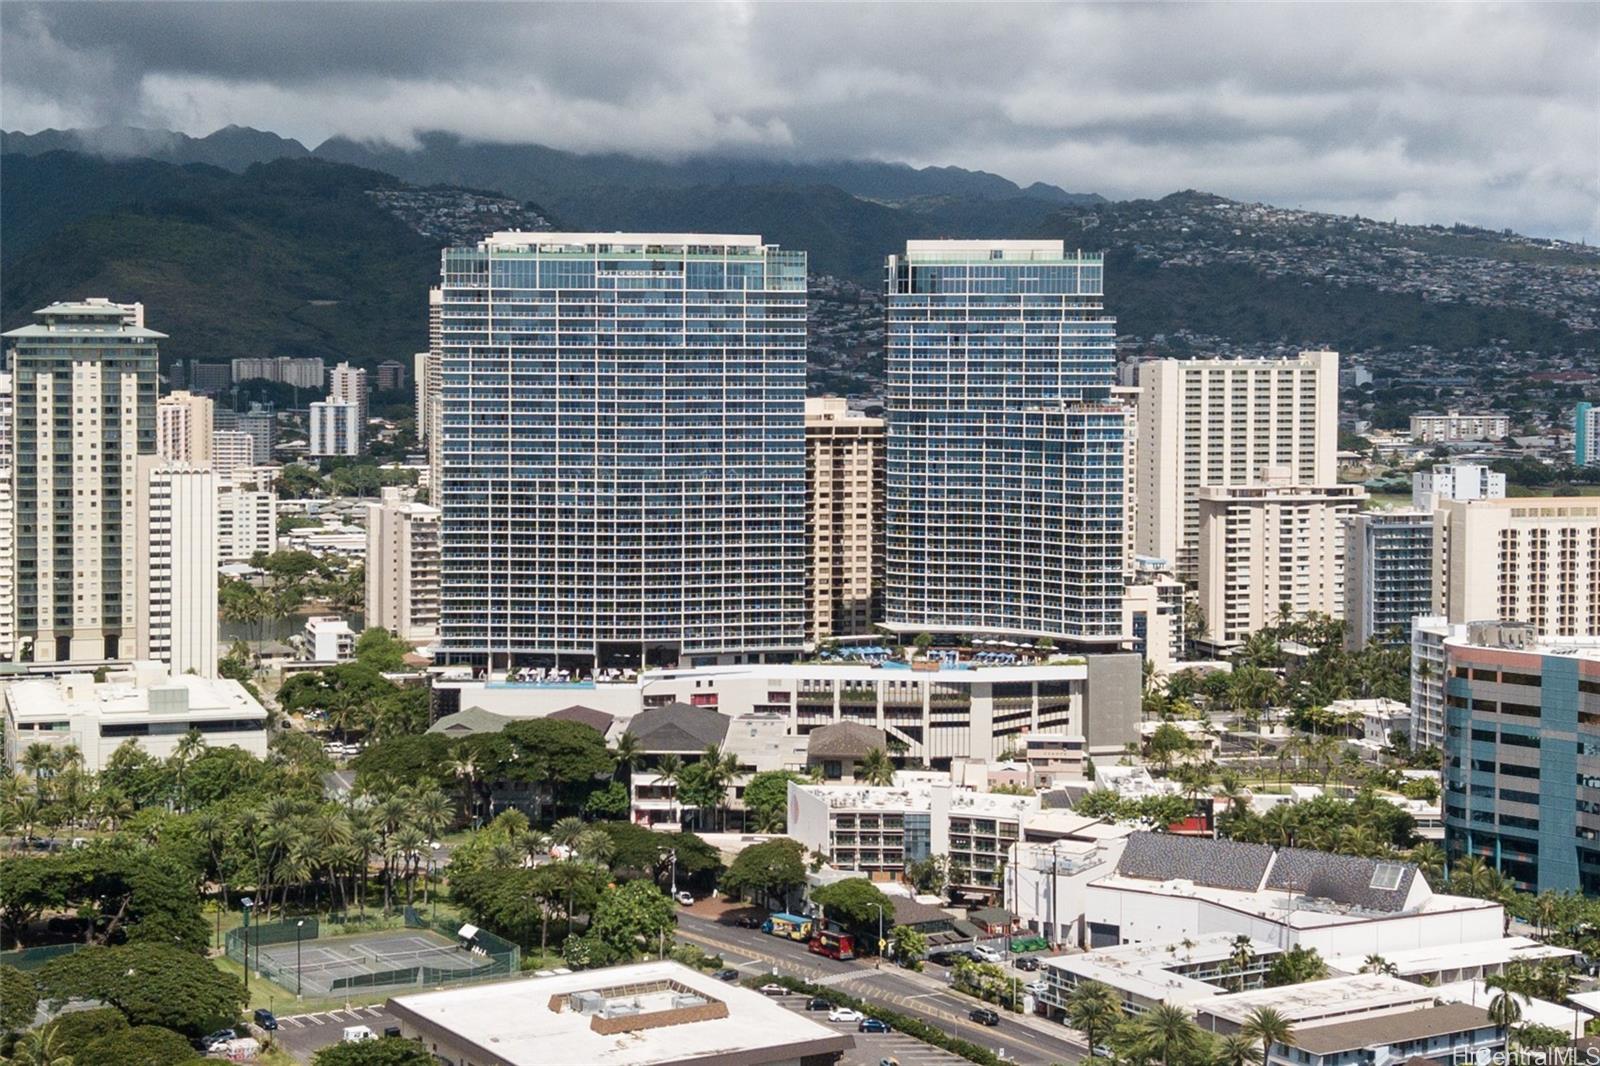 The Ritz-Carlton Residences Twr 2 - 383 Kalaimoku 2139 Kuhio Avenue #2901, Honolulu, HI 96815